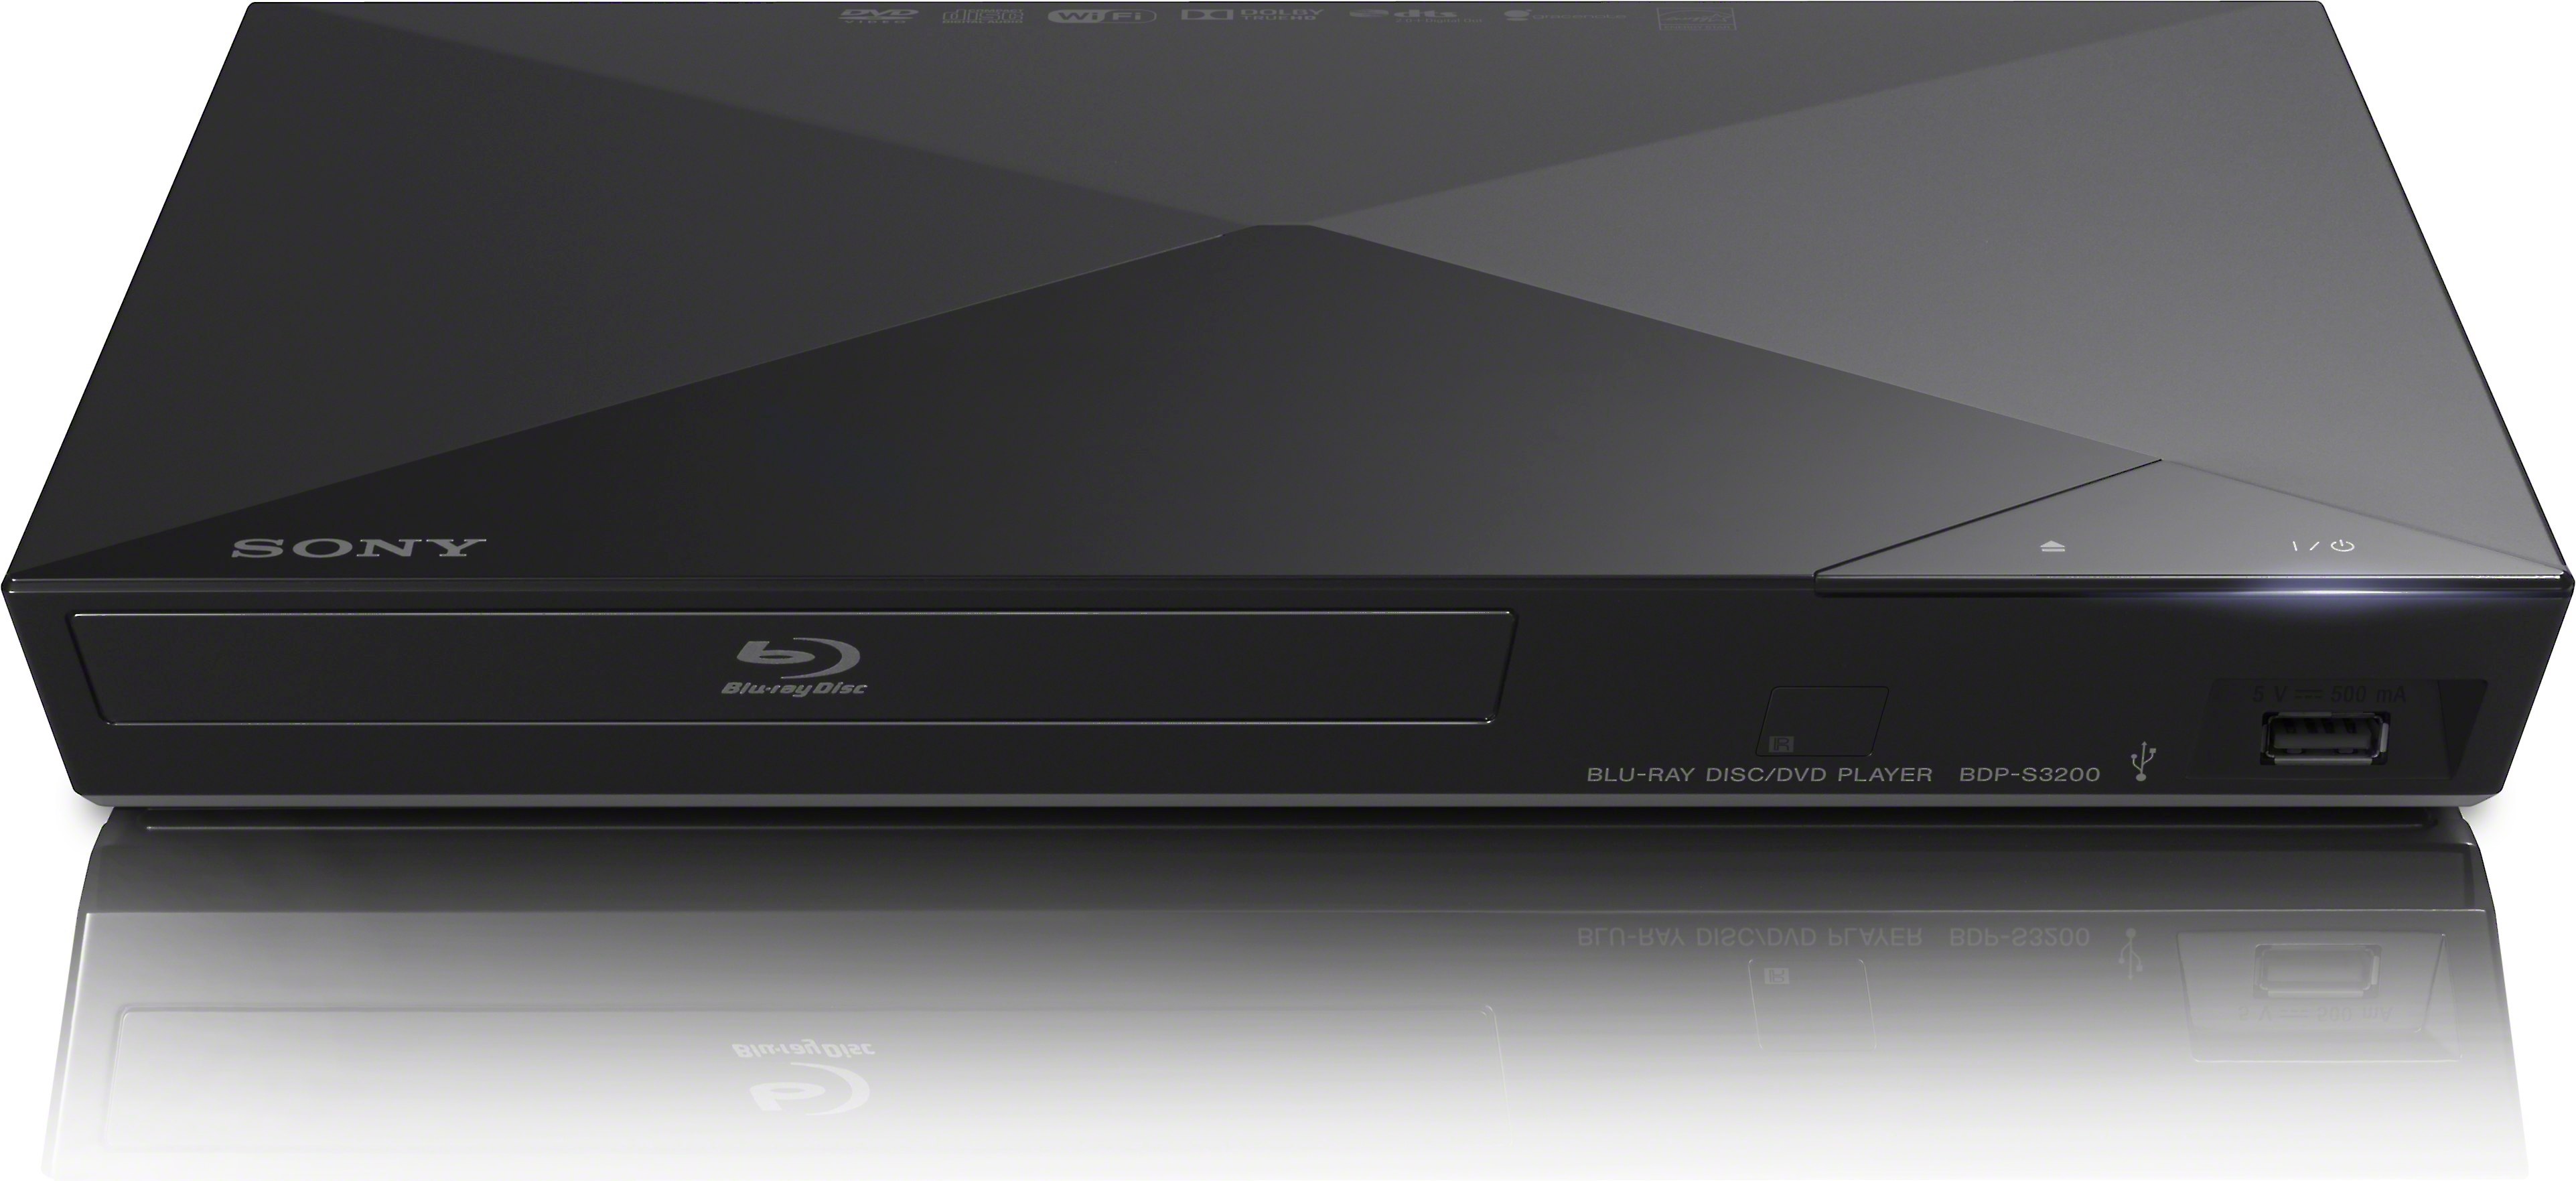 Sony p S30 Blu Ray Player With Wi Fi At Crutchfield